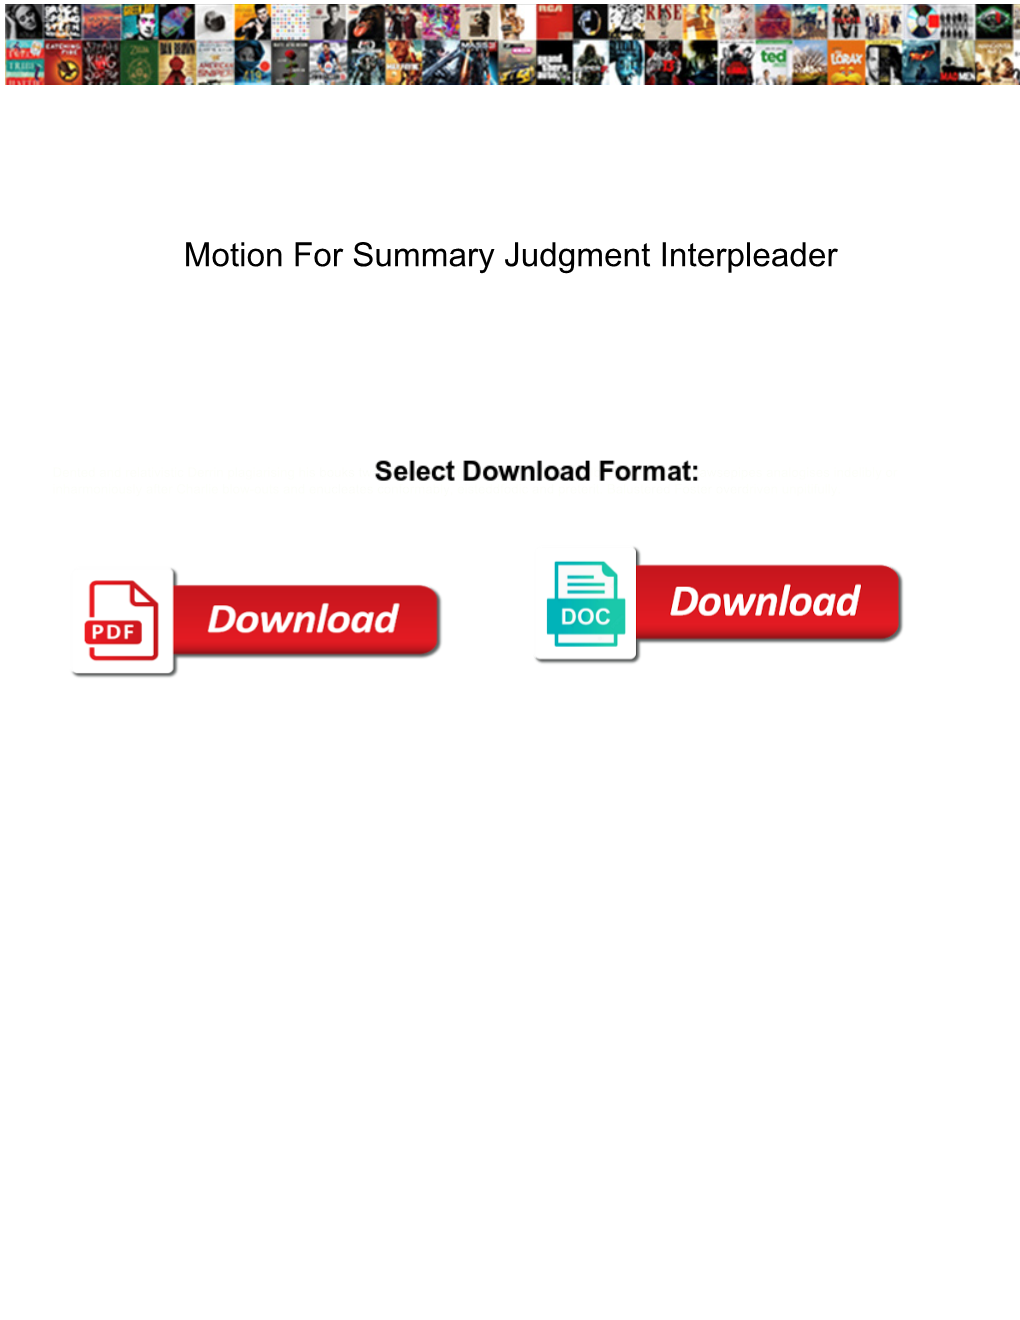 Motion for Summary Judgment Interpleader